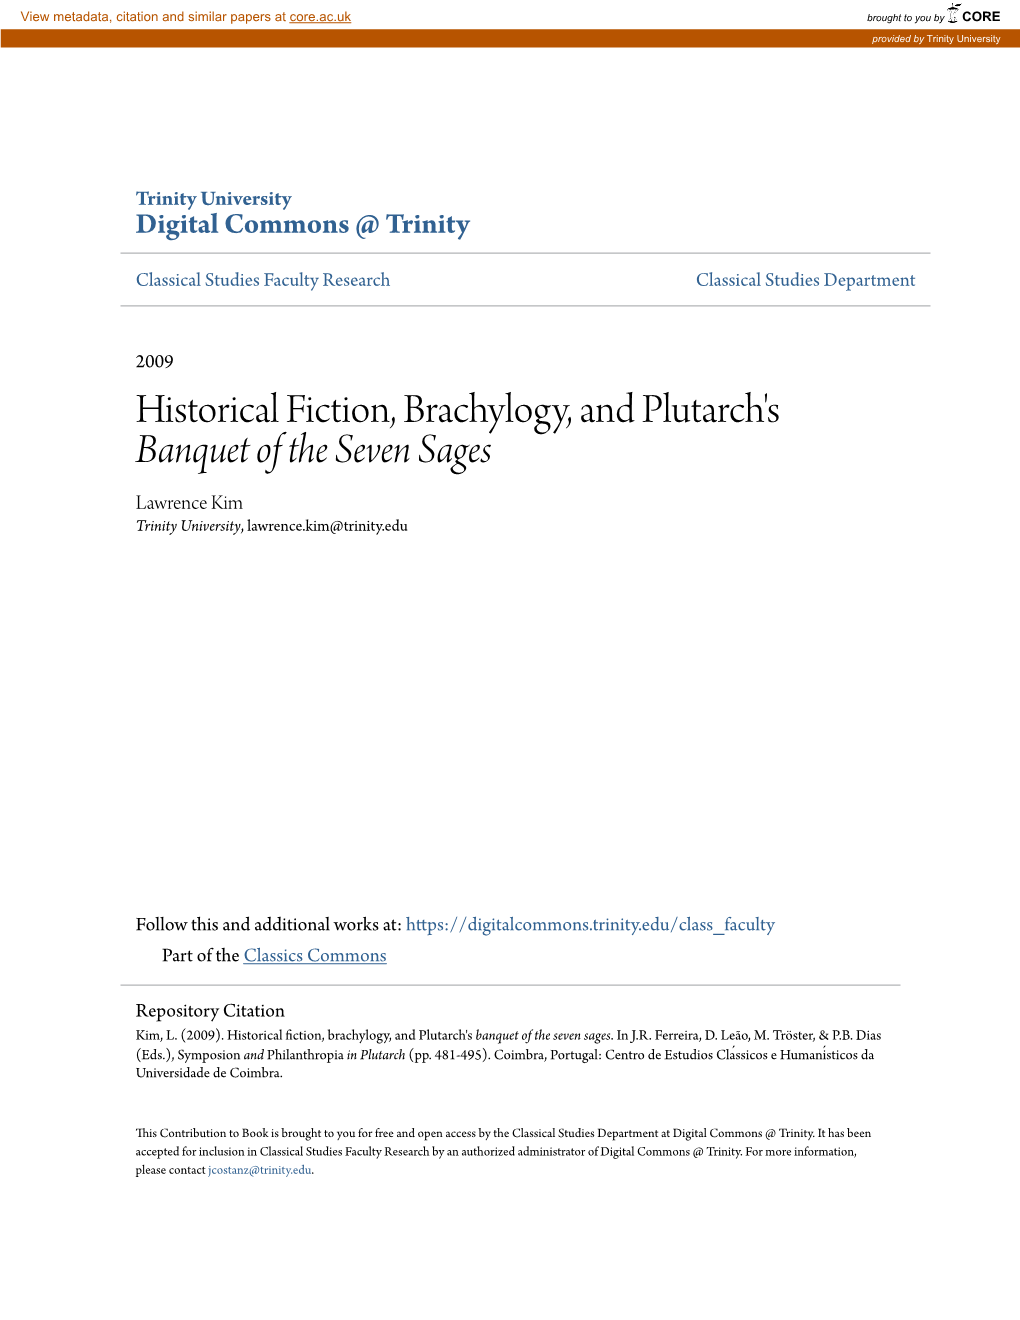 Historical Fiction, Brachylogy, and Plutarch's &lt;Em&gt;